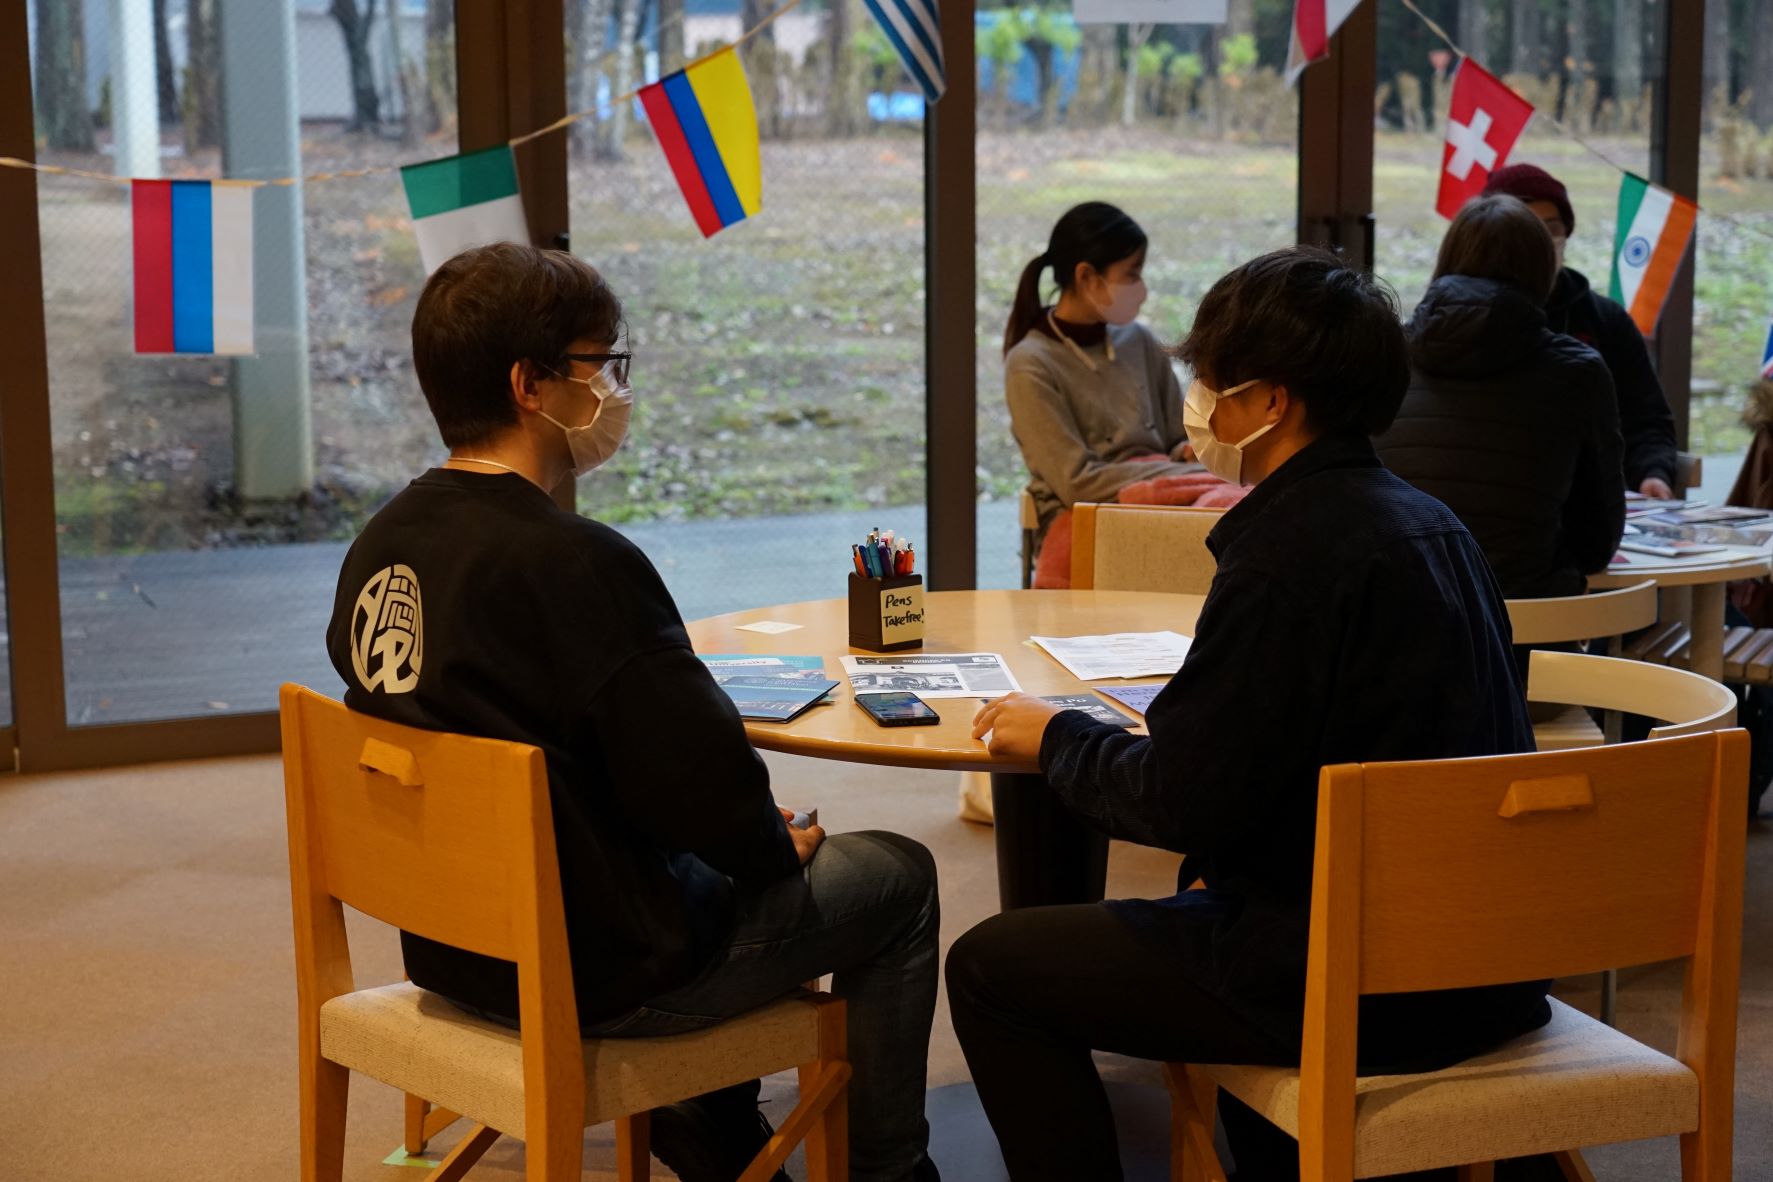 Photo of degree-seeking and international students conversing